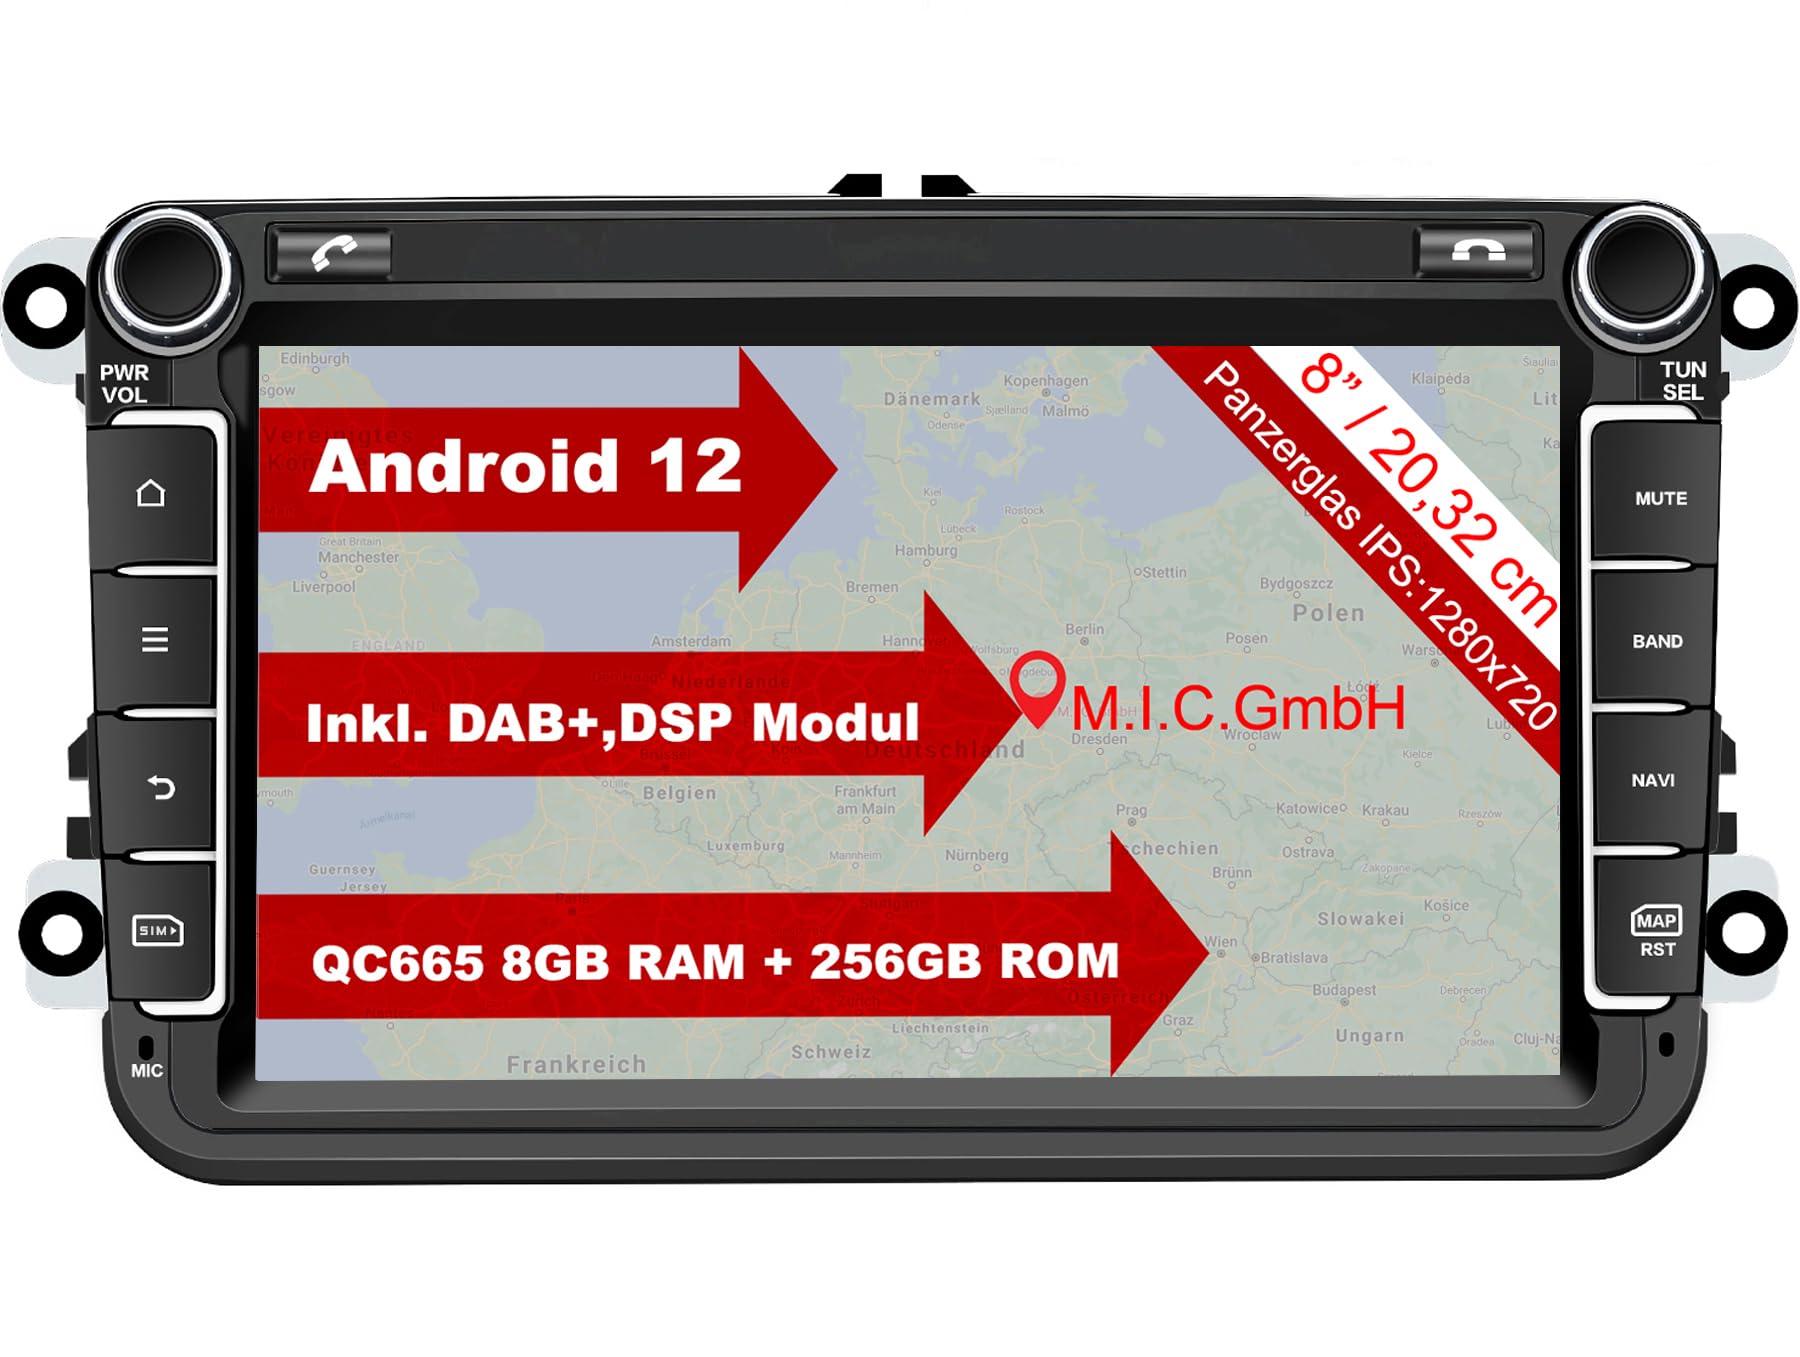 M.I.C. AV8V7-Ultra Android 12 Autoradio mit navi Qualcomm Snapdragon 665 8G+256G Ersatz für VW Golf t5 touran Passat RNS RCD Skoda SEAT: SIM DAB Plus BT 5.0 WiFi 2din 8" IPS Panzerglas Bildschirm USB